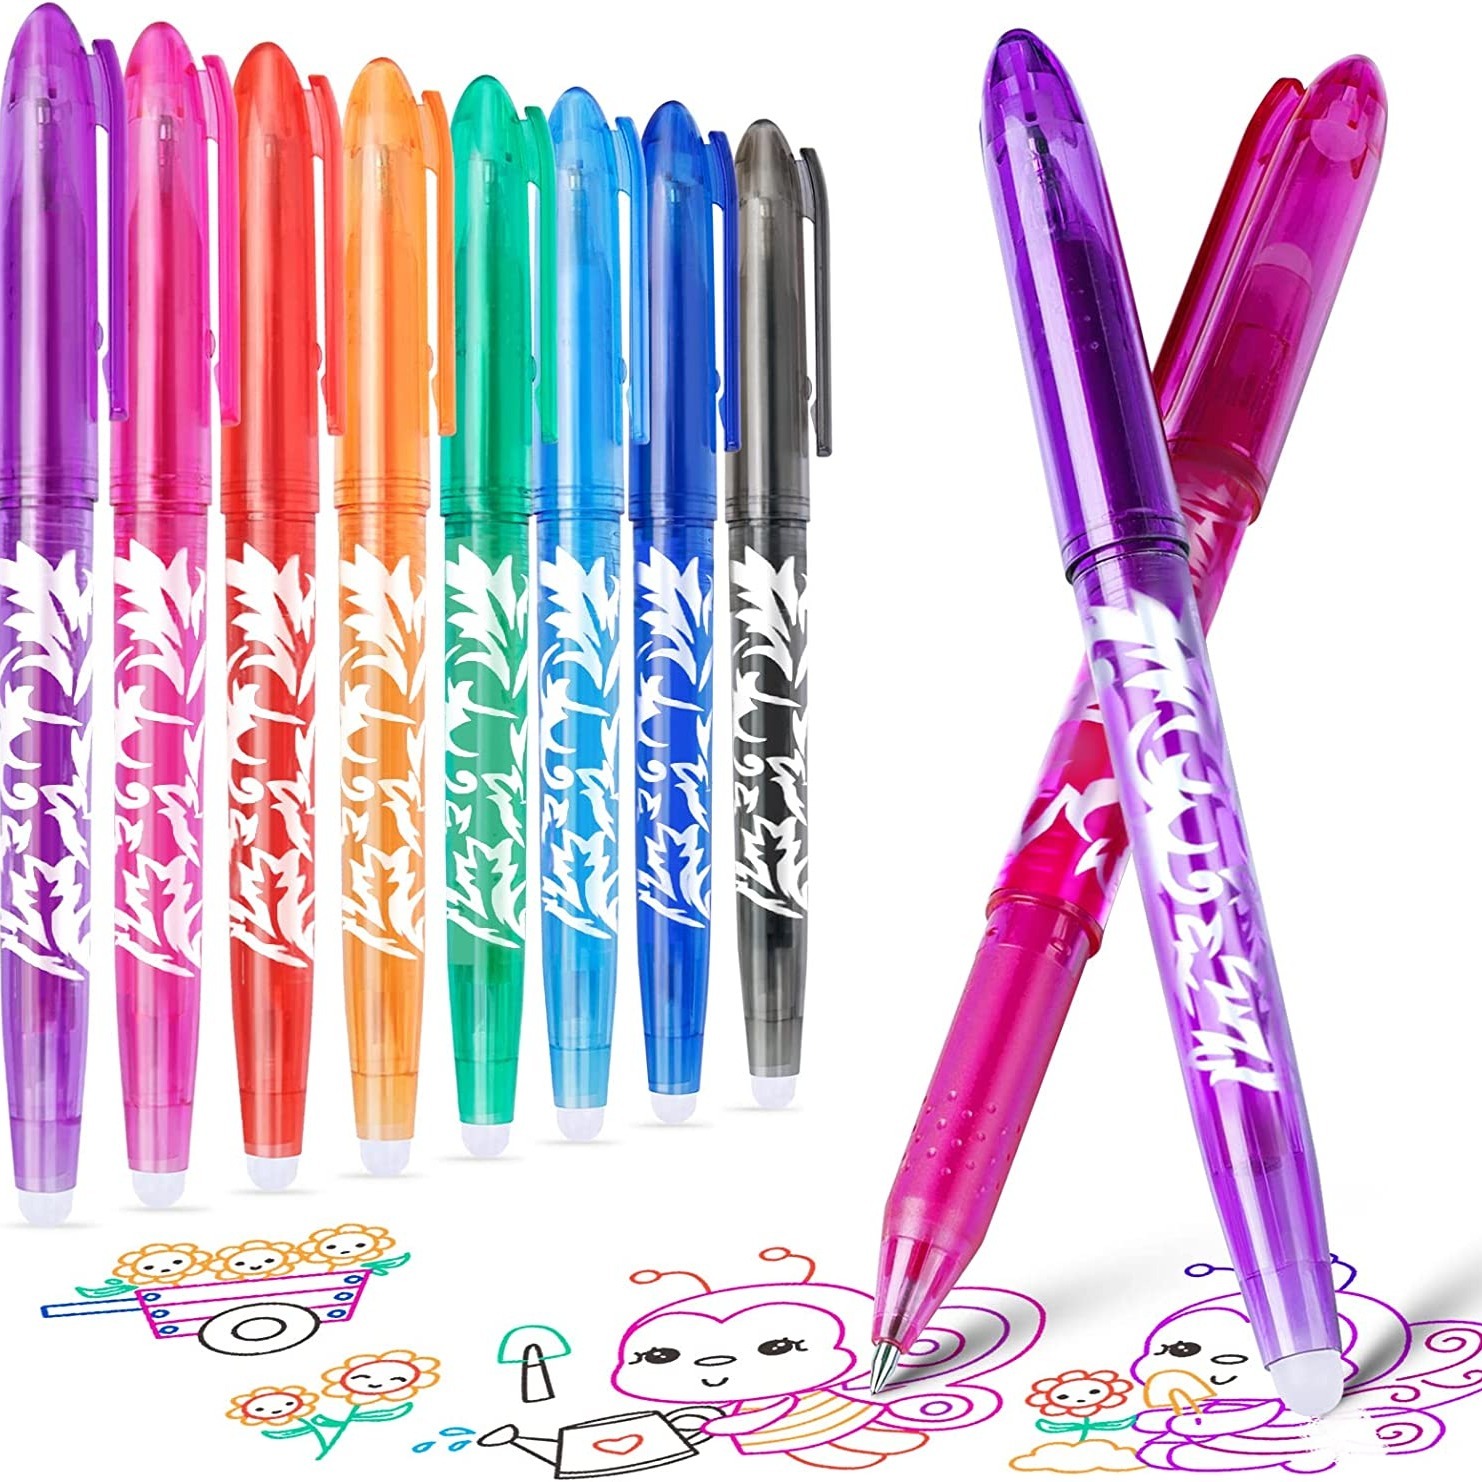 Frixion Pen, Heat Erasable - Purple, Pink, Orange, Black, Blue & Red